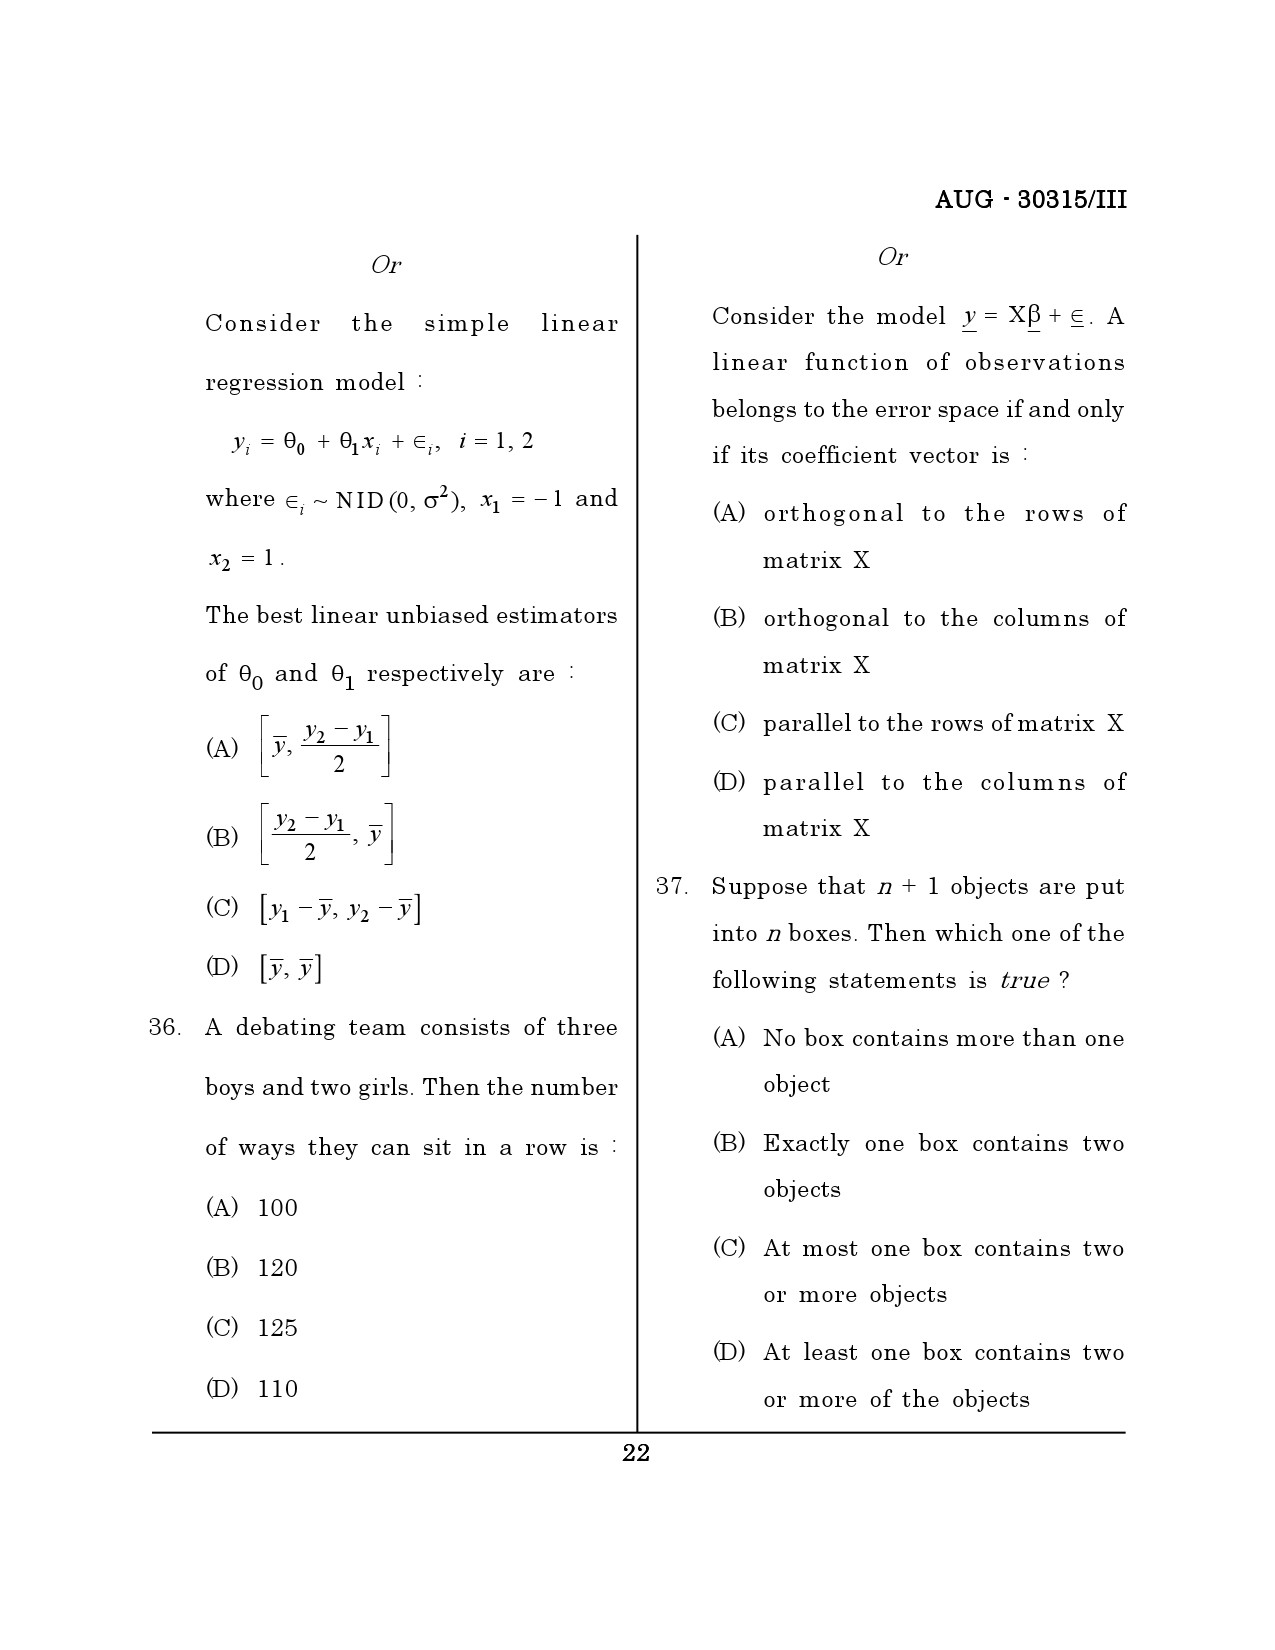 Maharashtra SET Mathematical Sciences Question Paper III August 2015 21